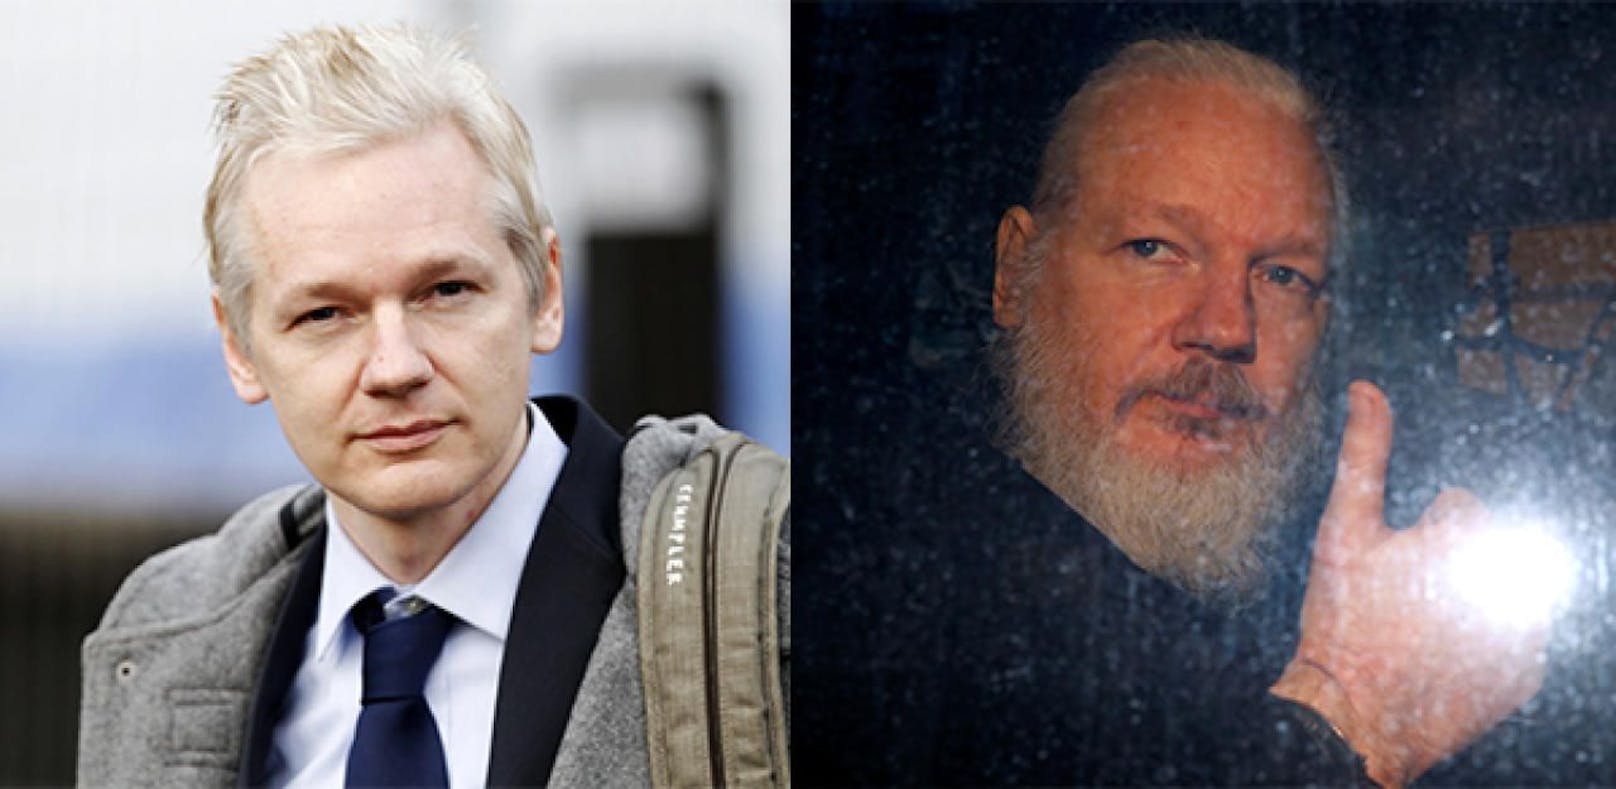 Rasant gealtert: Wurde Julian Assange gefoltert?